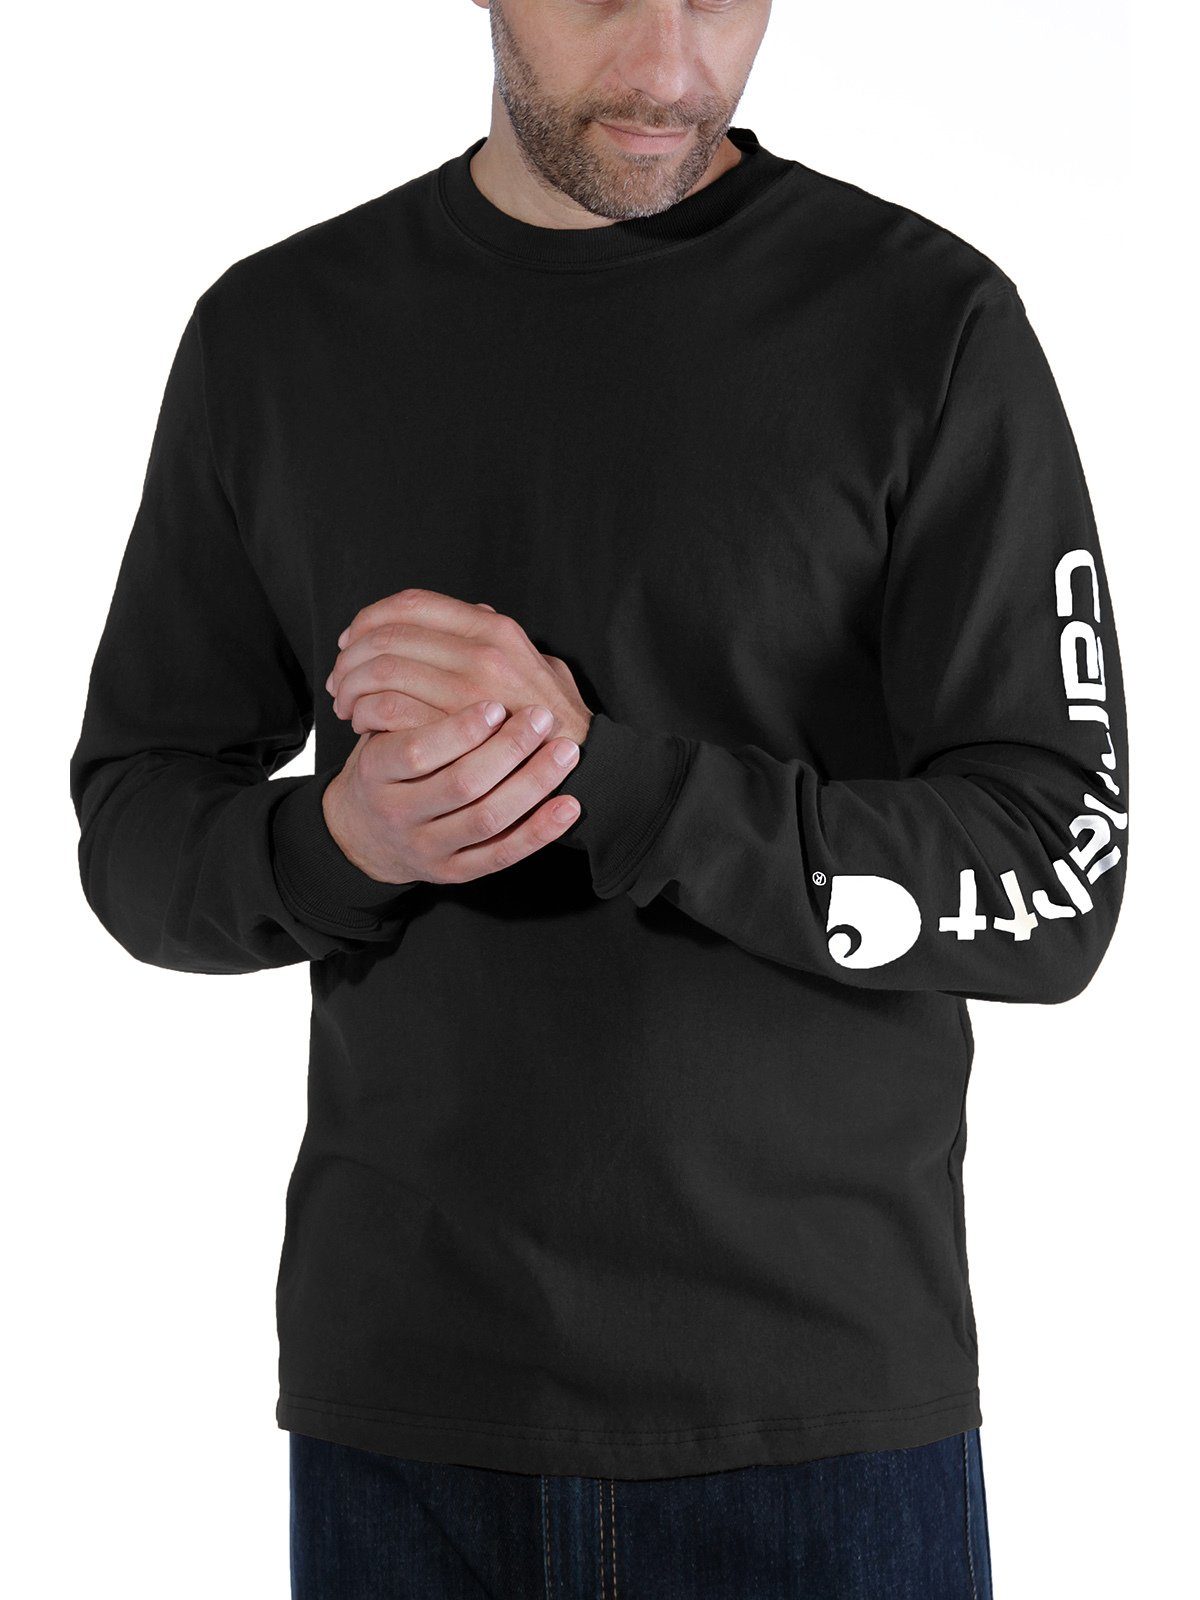 T-Shirt Carhartt Langarmshirt Sleeve black Long